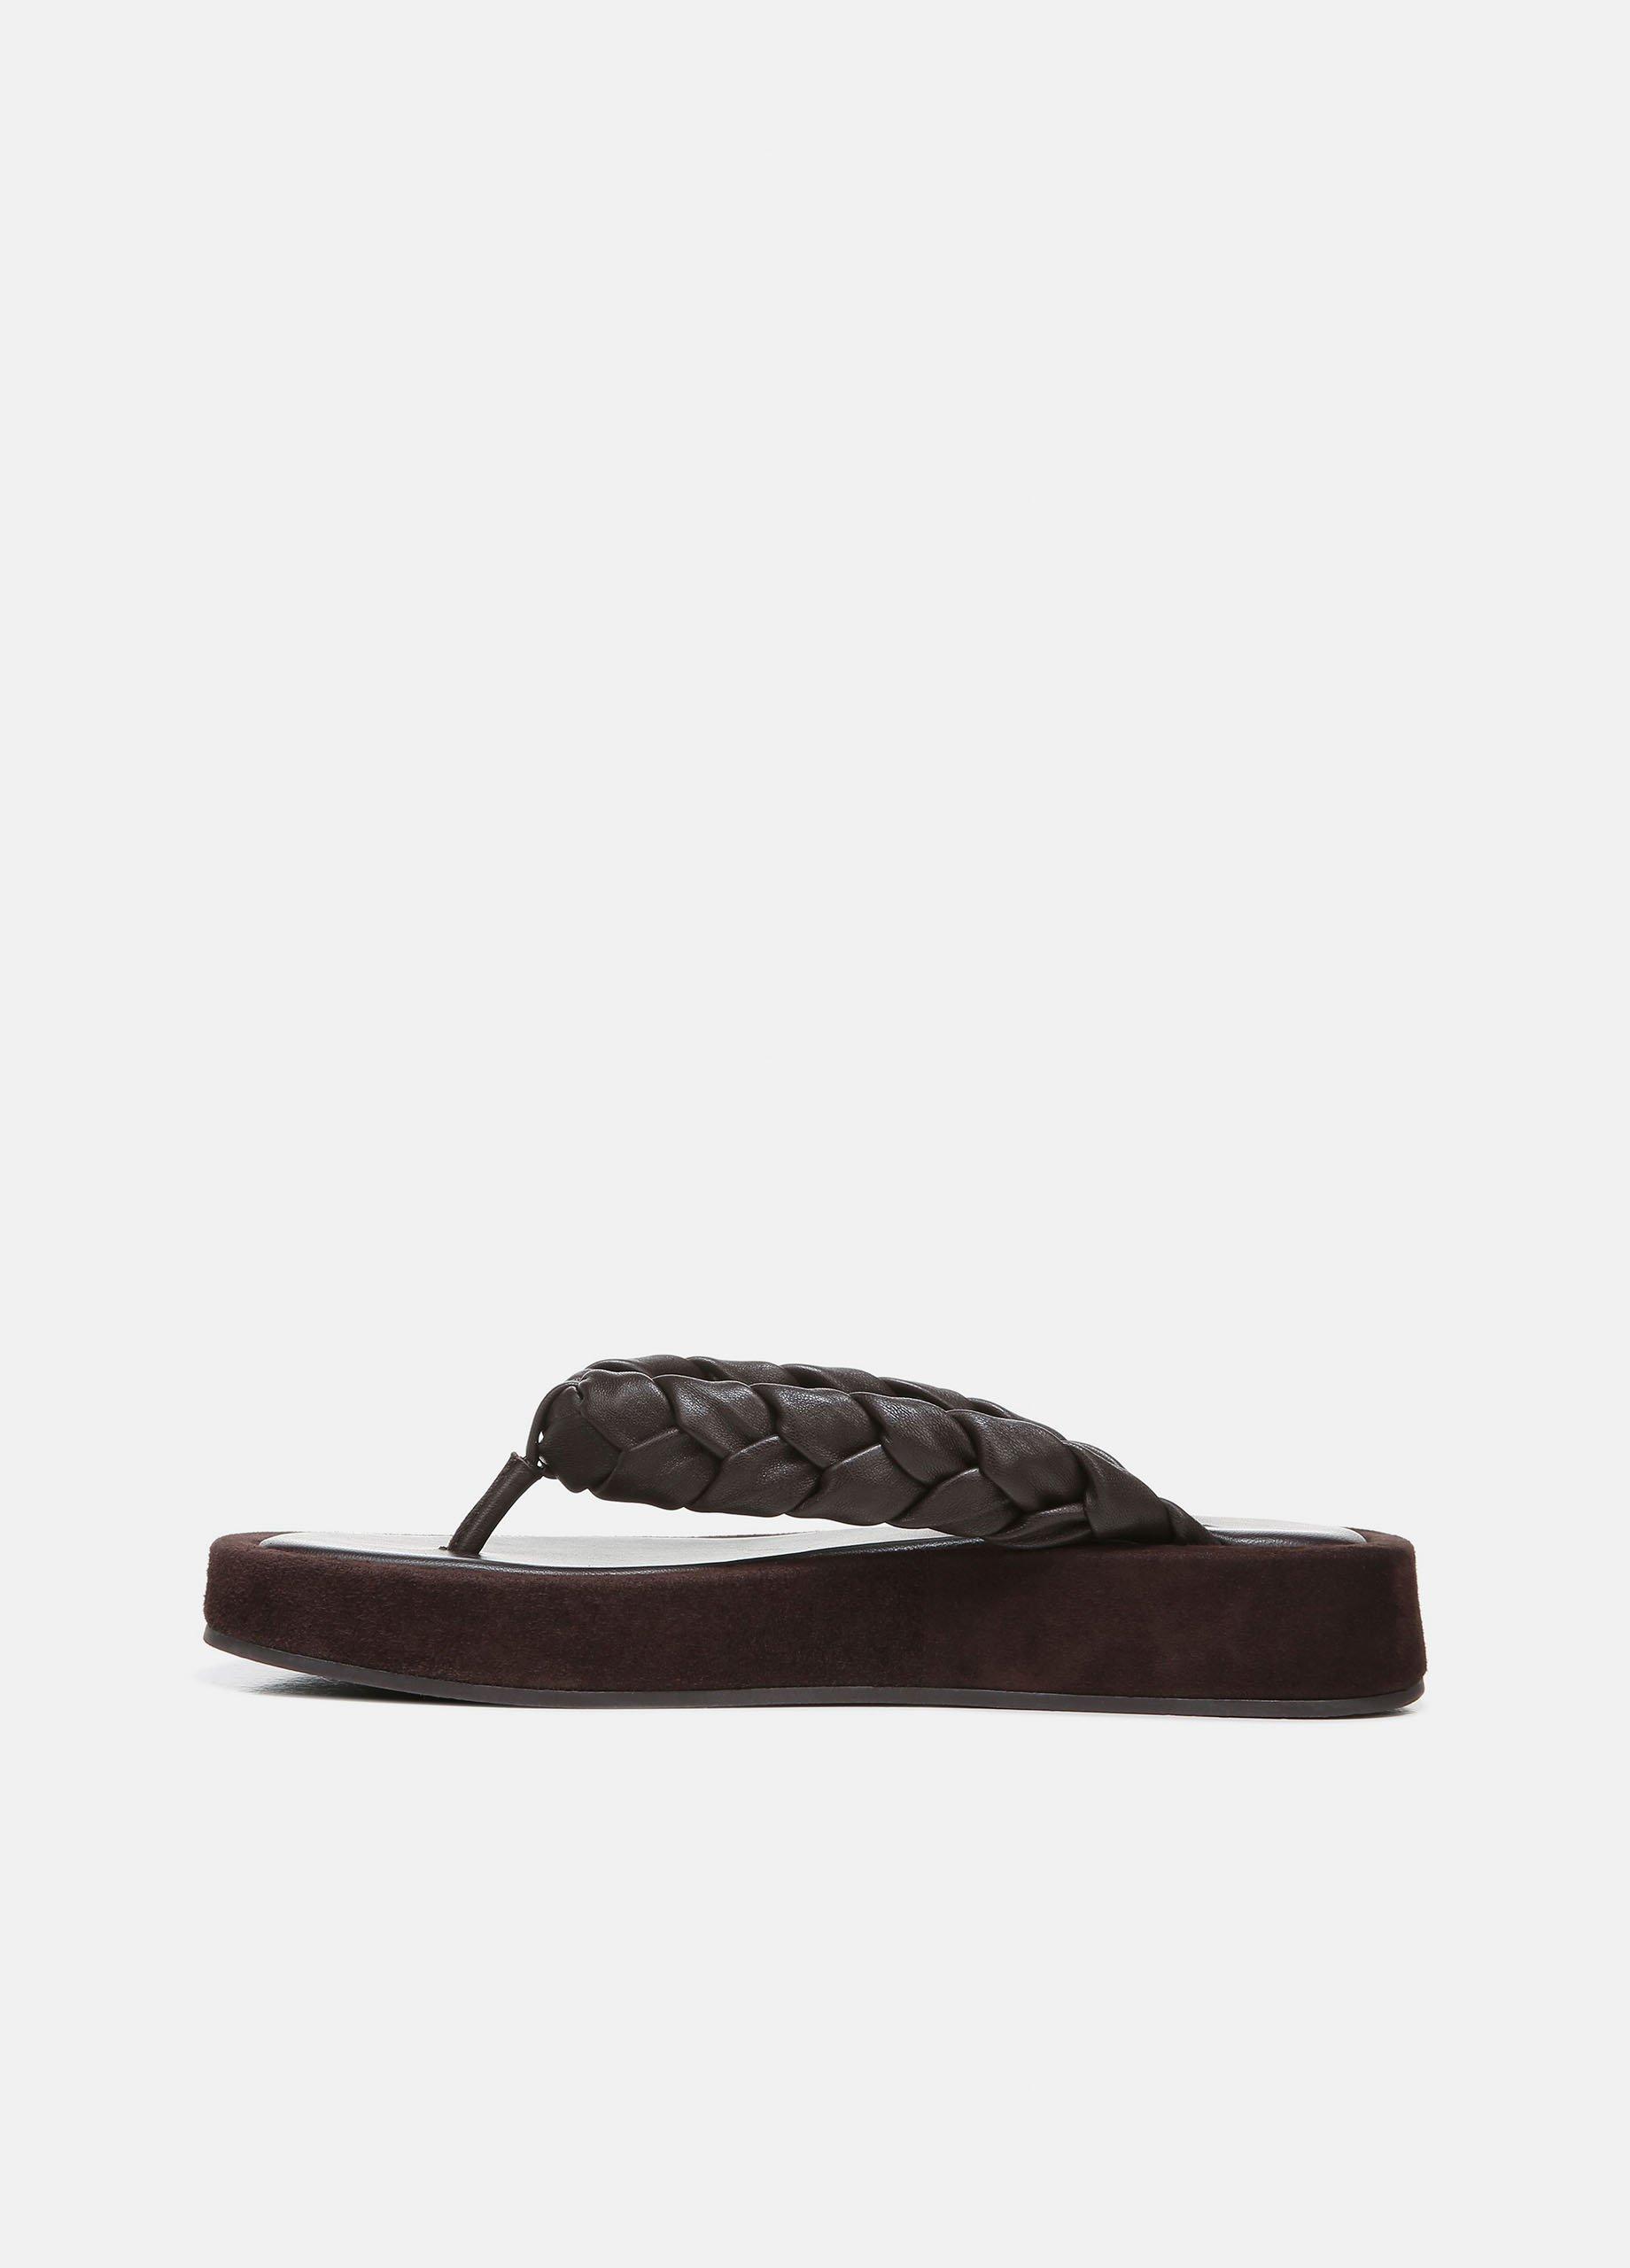 Nita Leather Sandal, Chocolate, Size 9.5 Vince